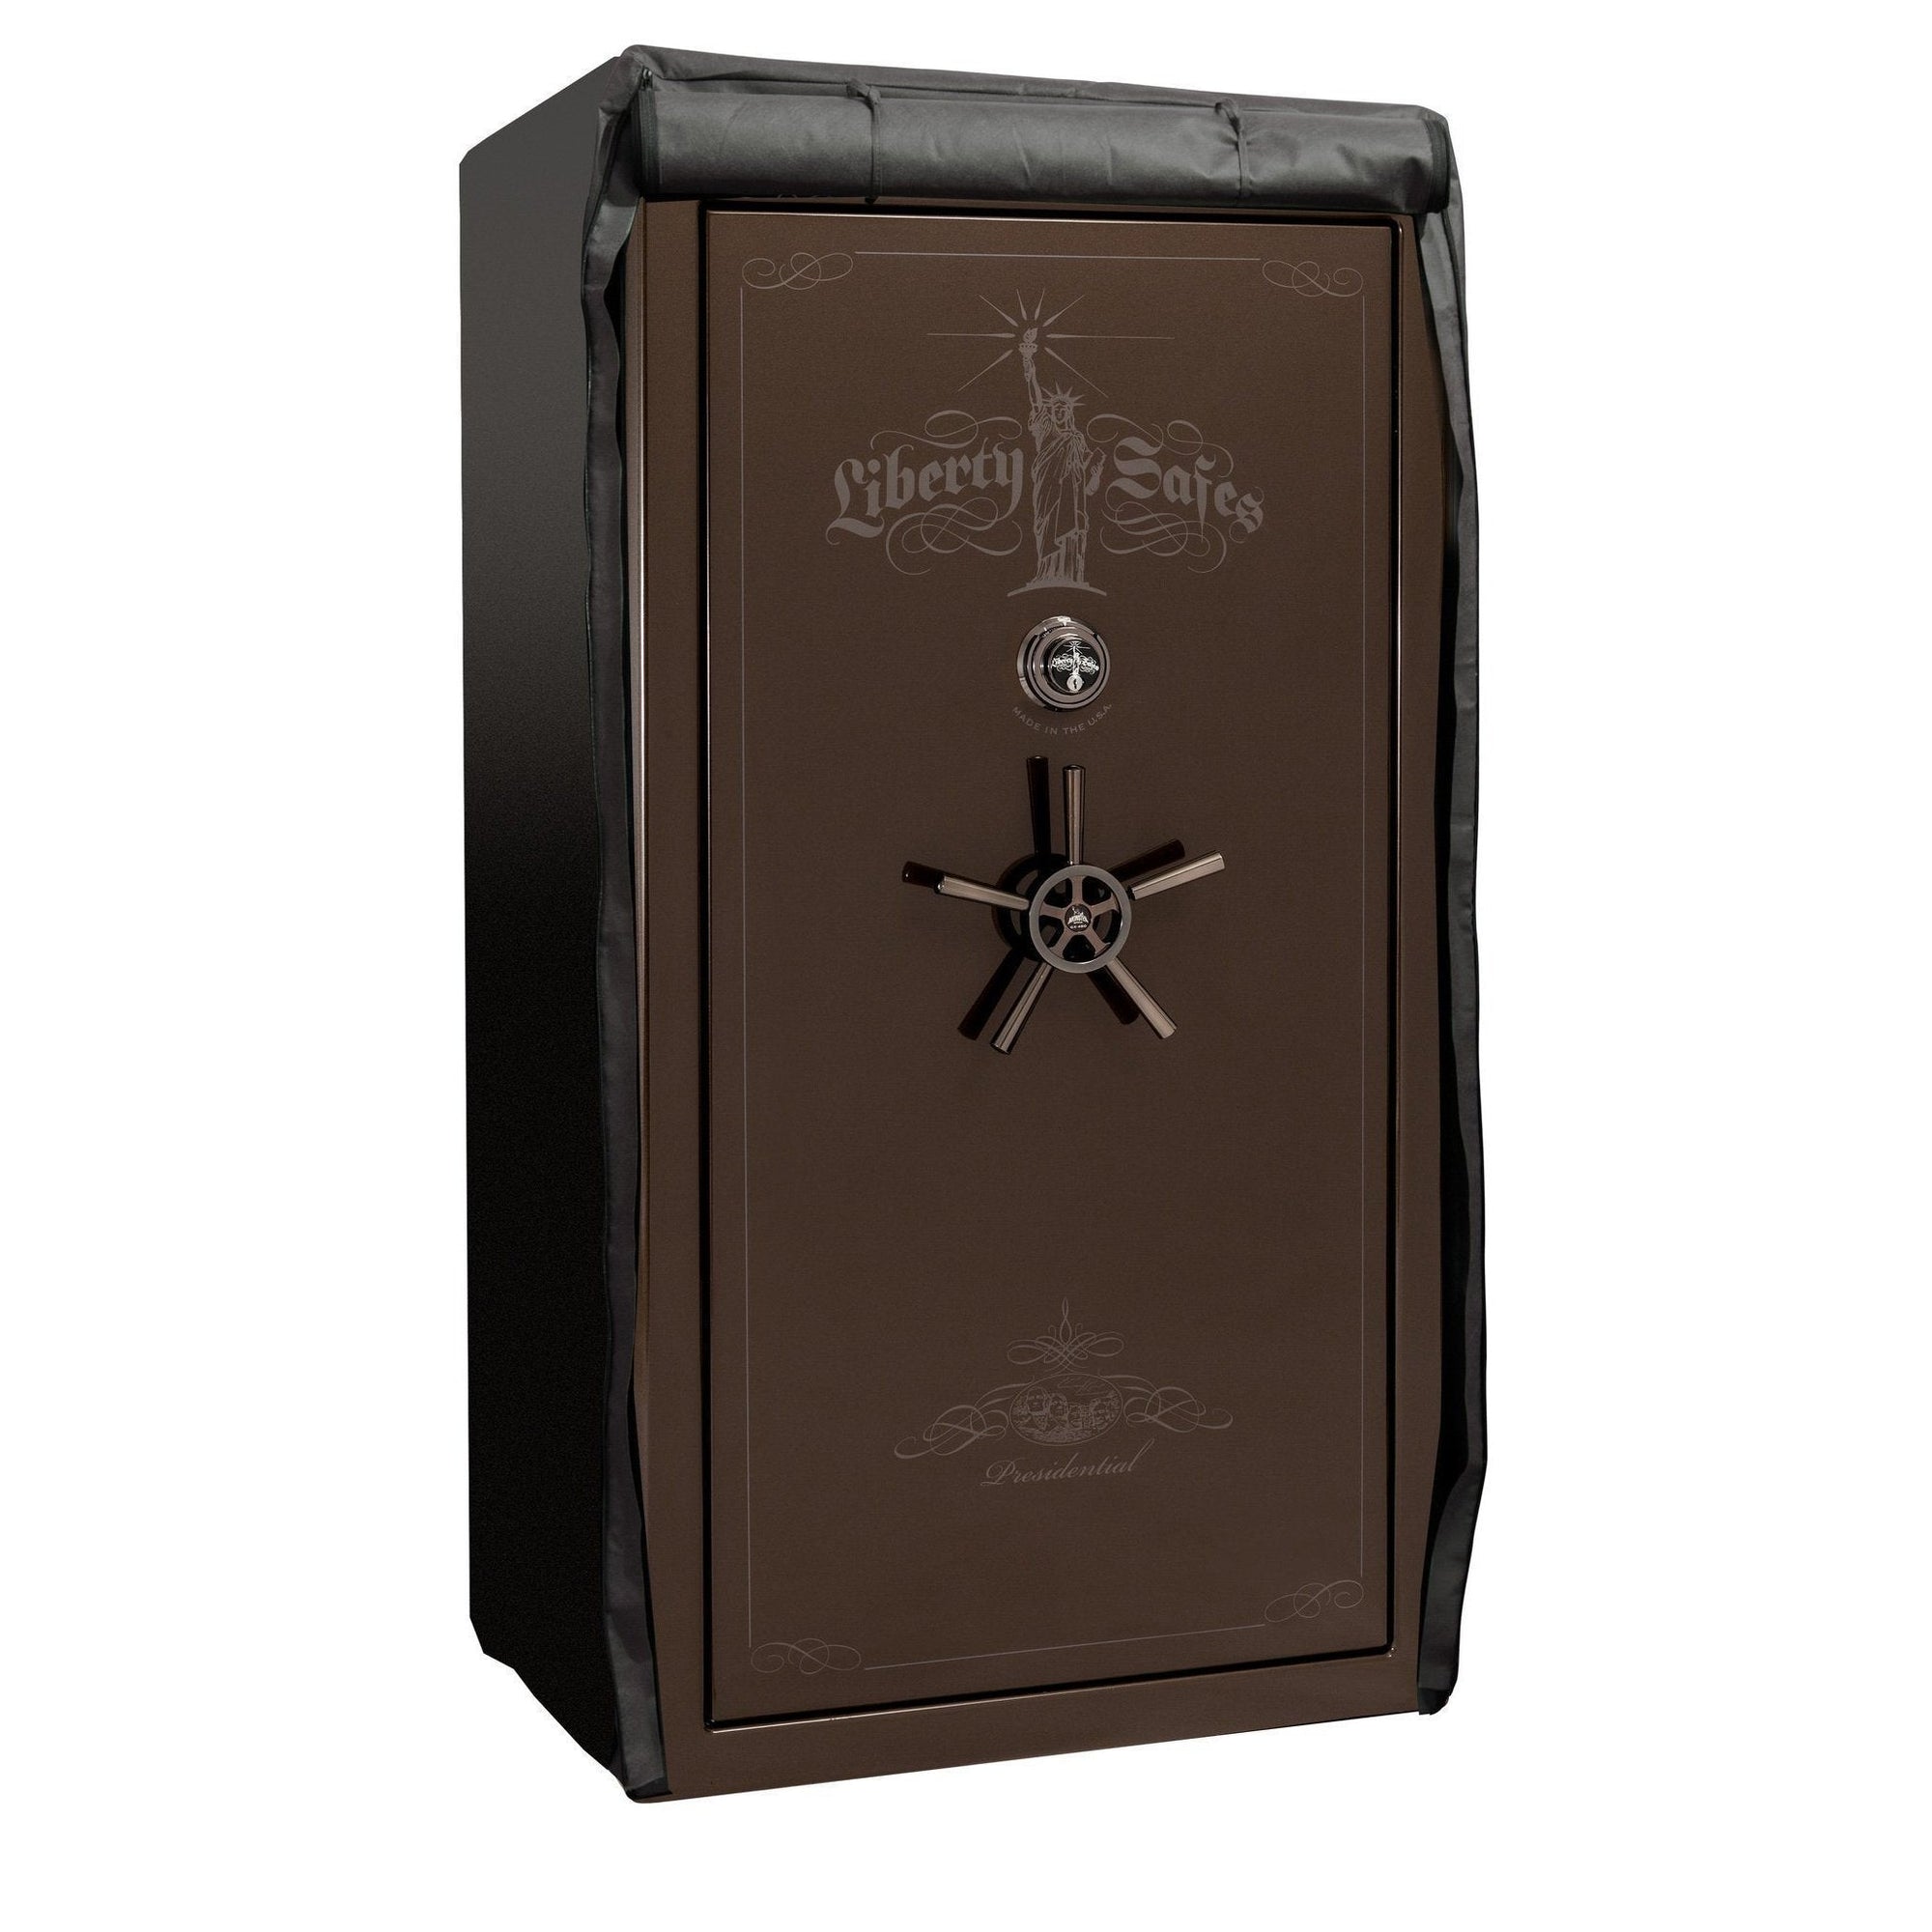 Accessory - security - safe cover - 40 size safes - MODLOCK